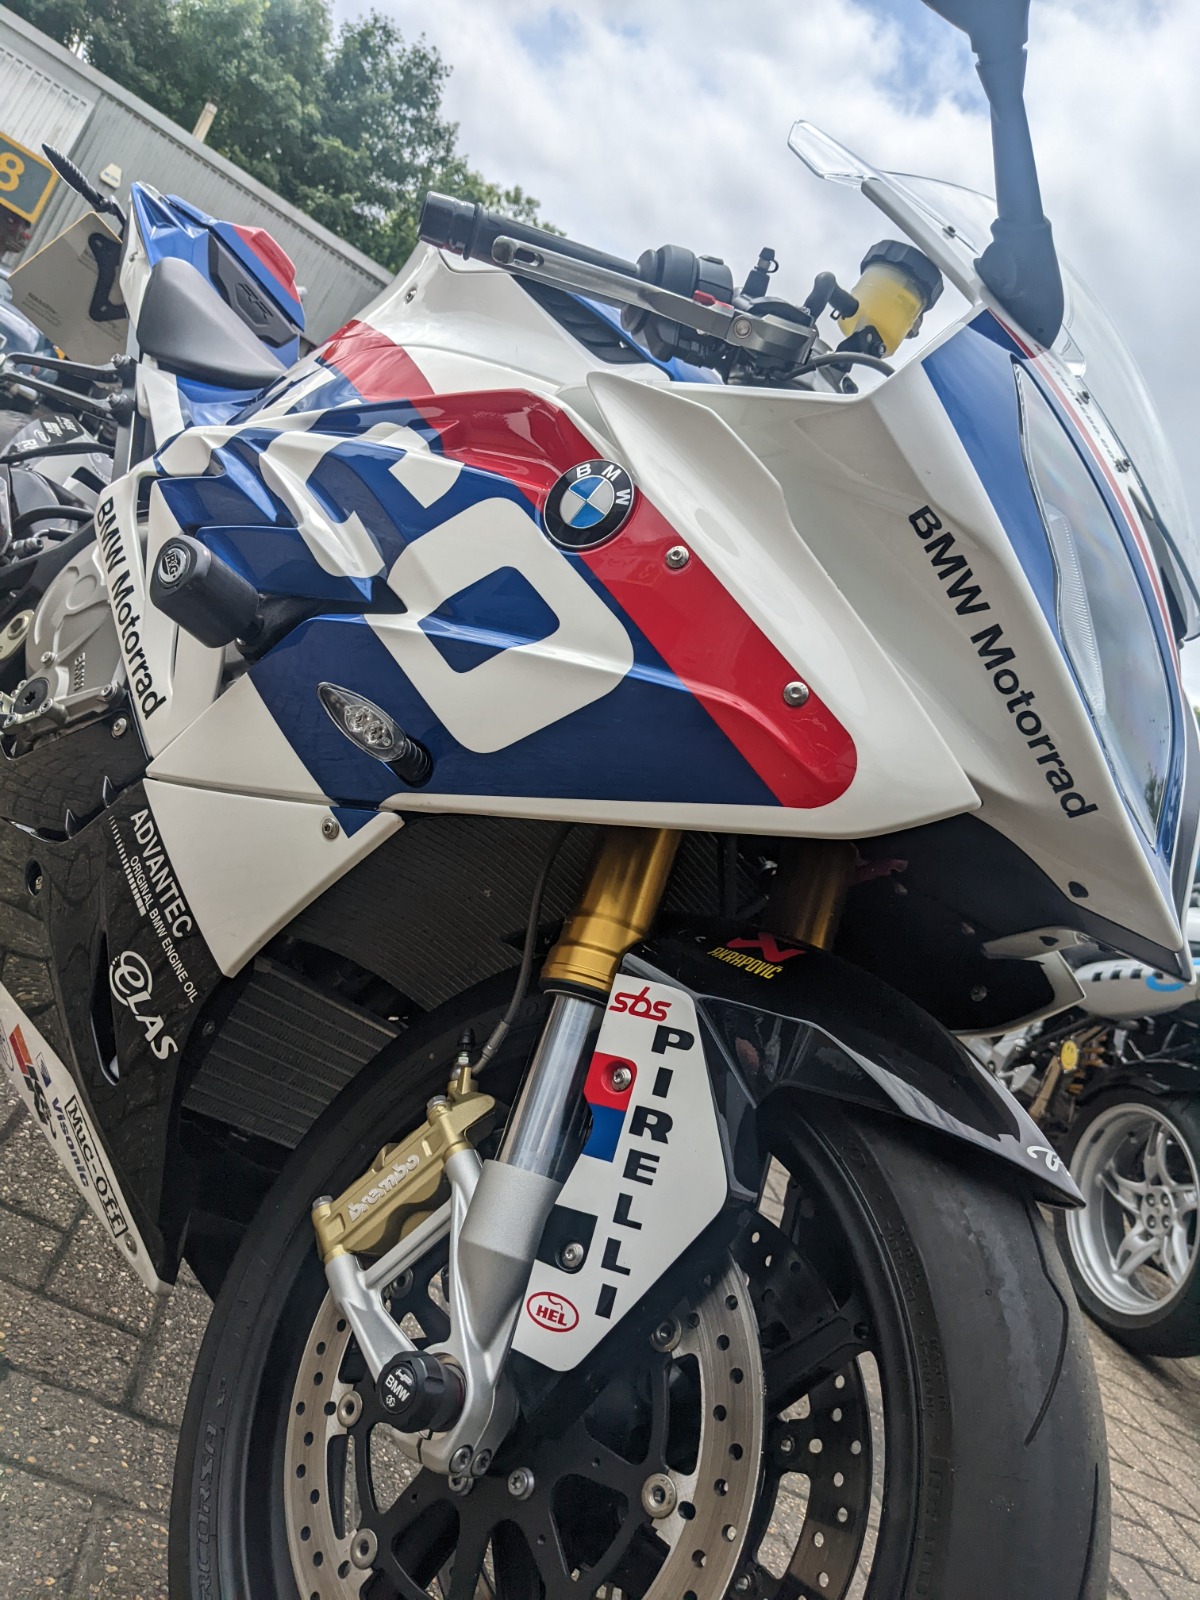 BMW Motorbike Repairs Chessington And West London